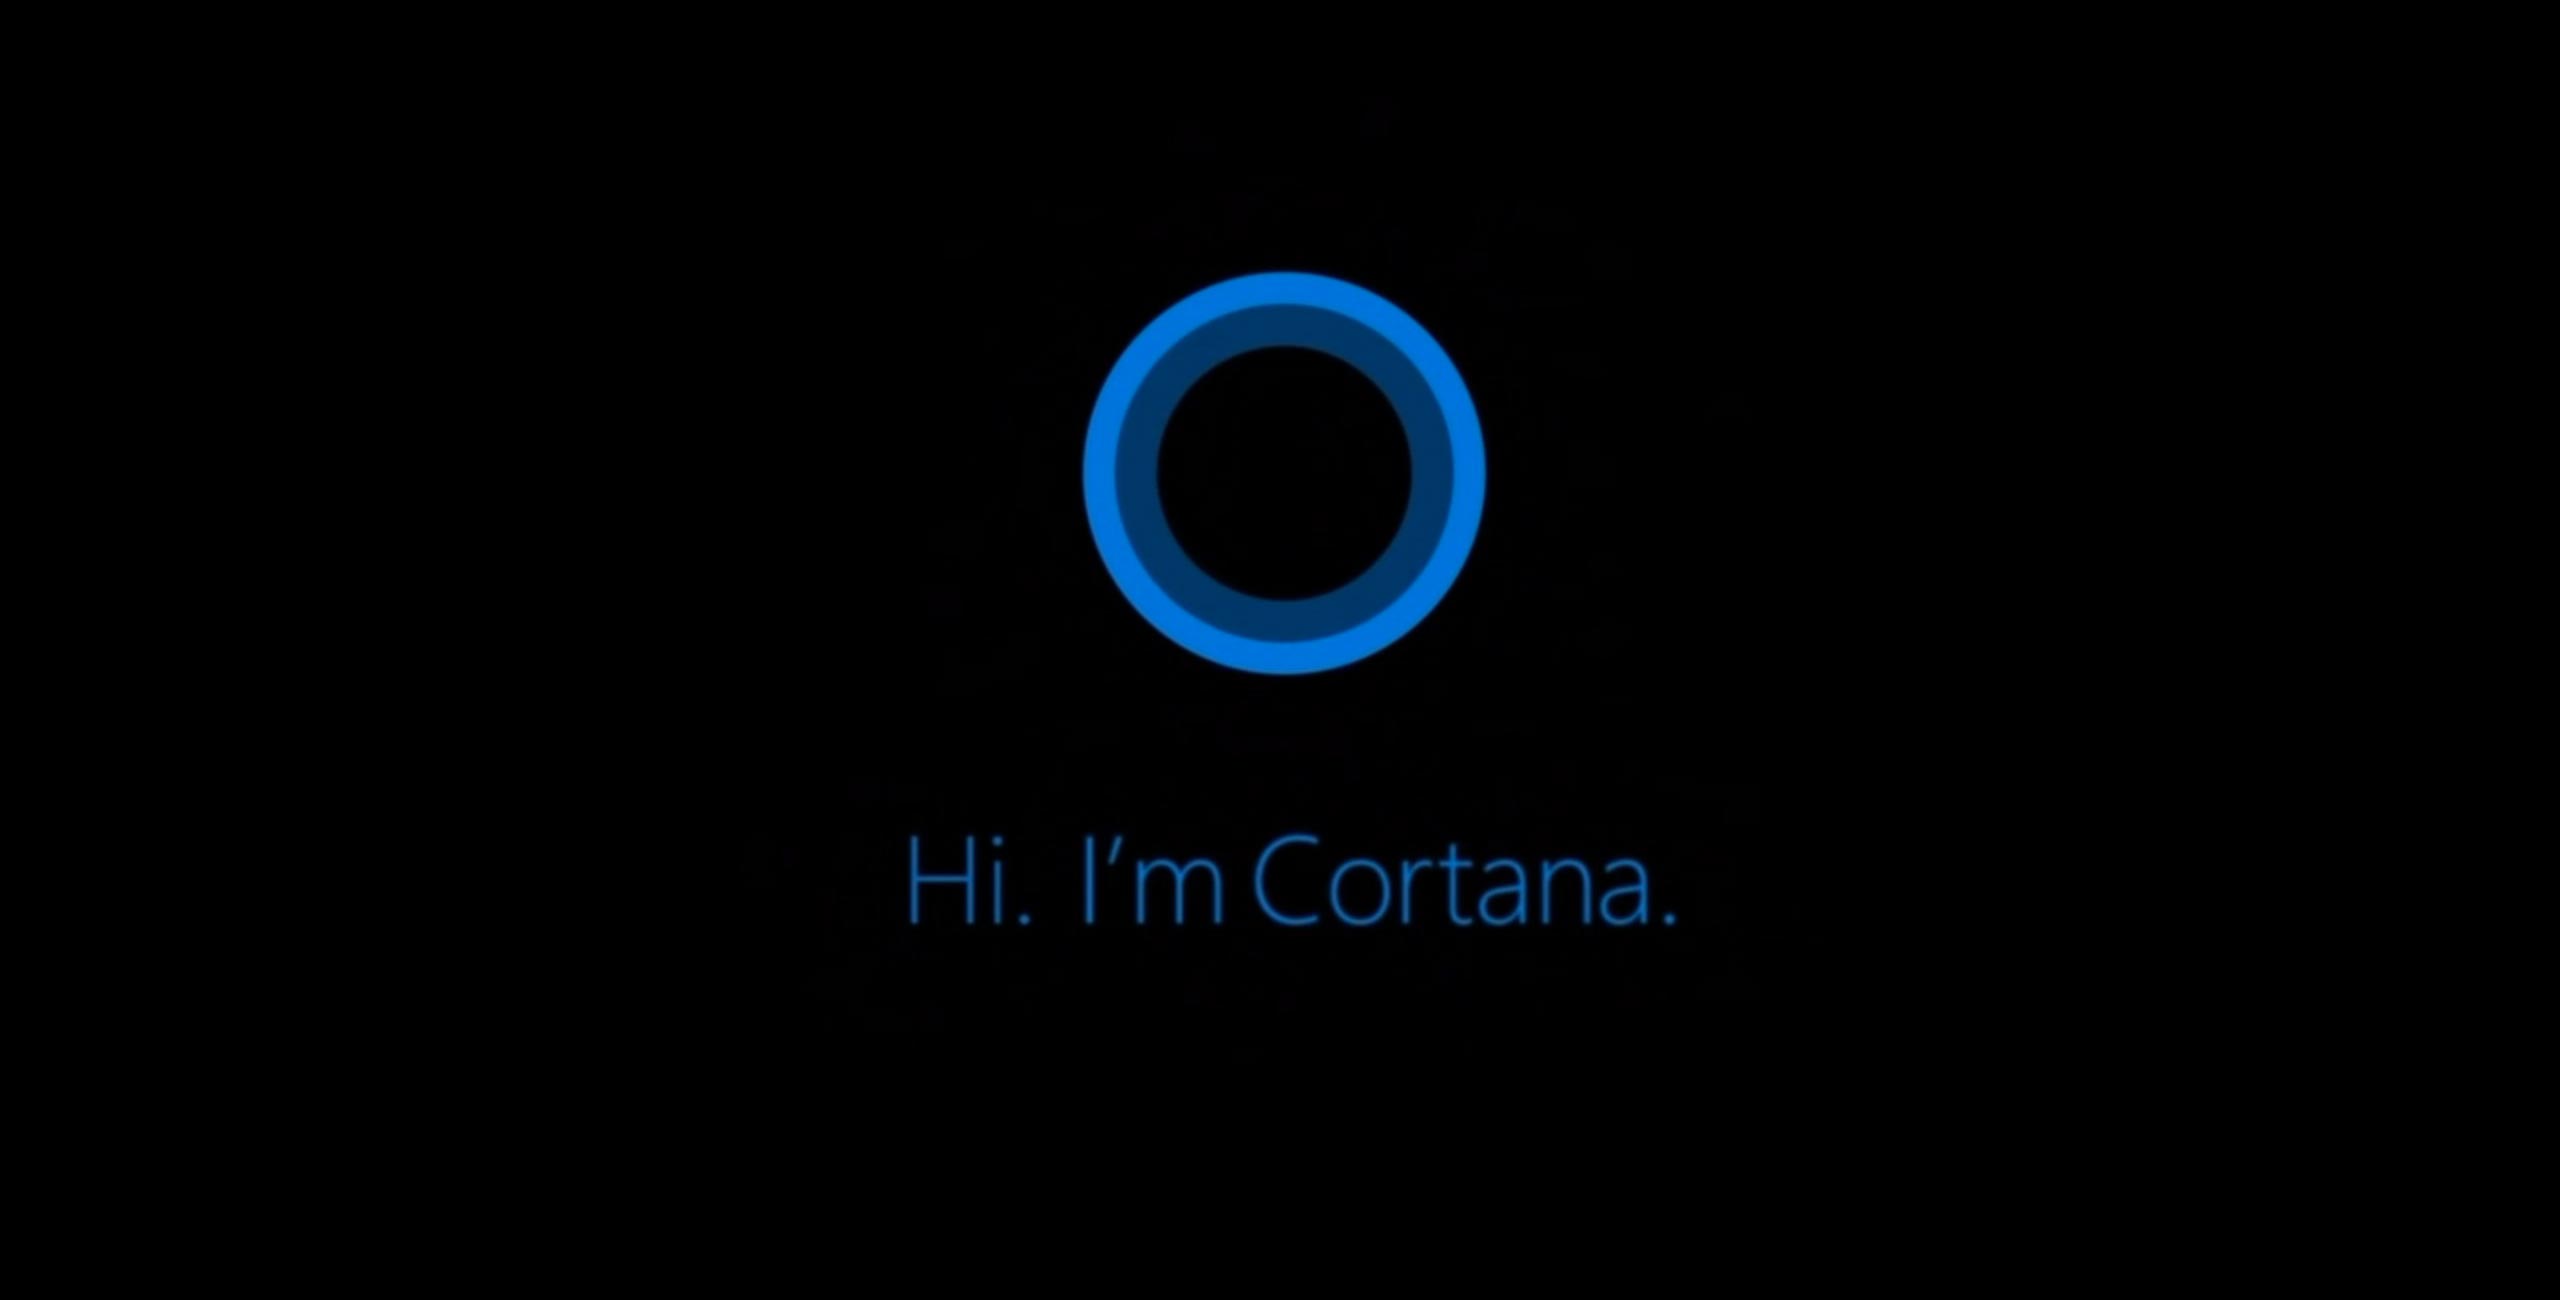 Cortana tips and tricks